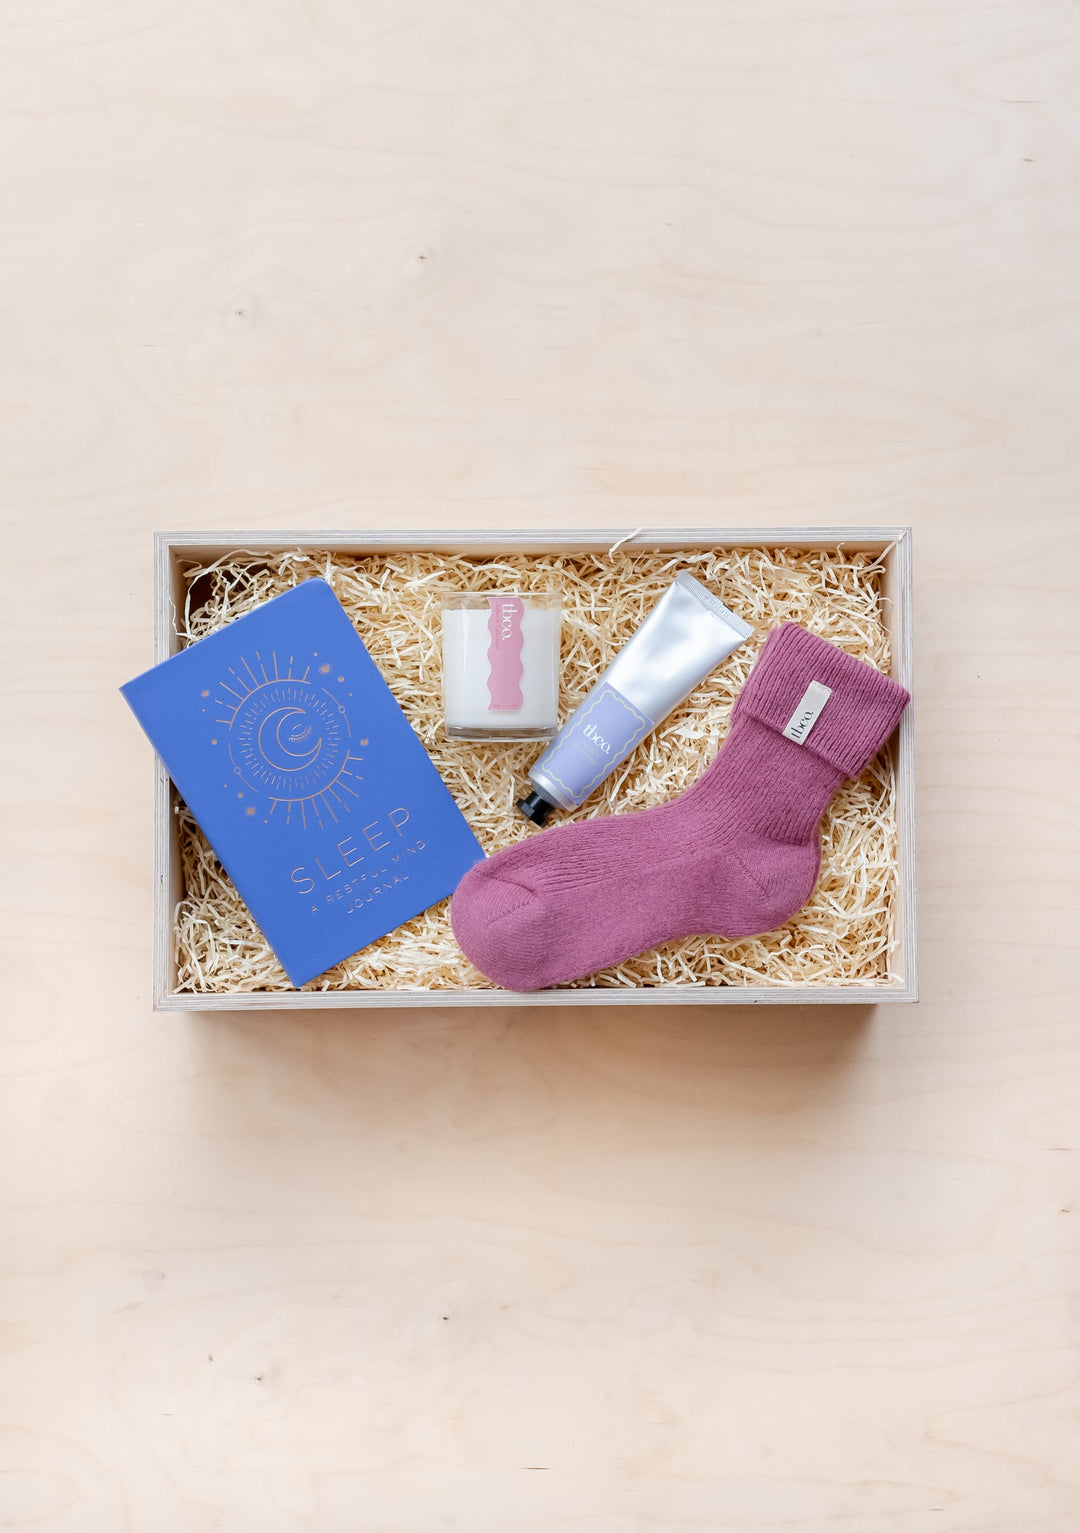 Ready-Made Sleep Easy Gift Box